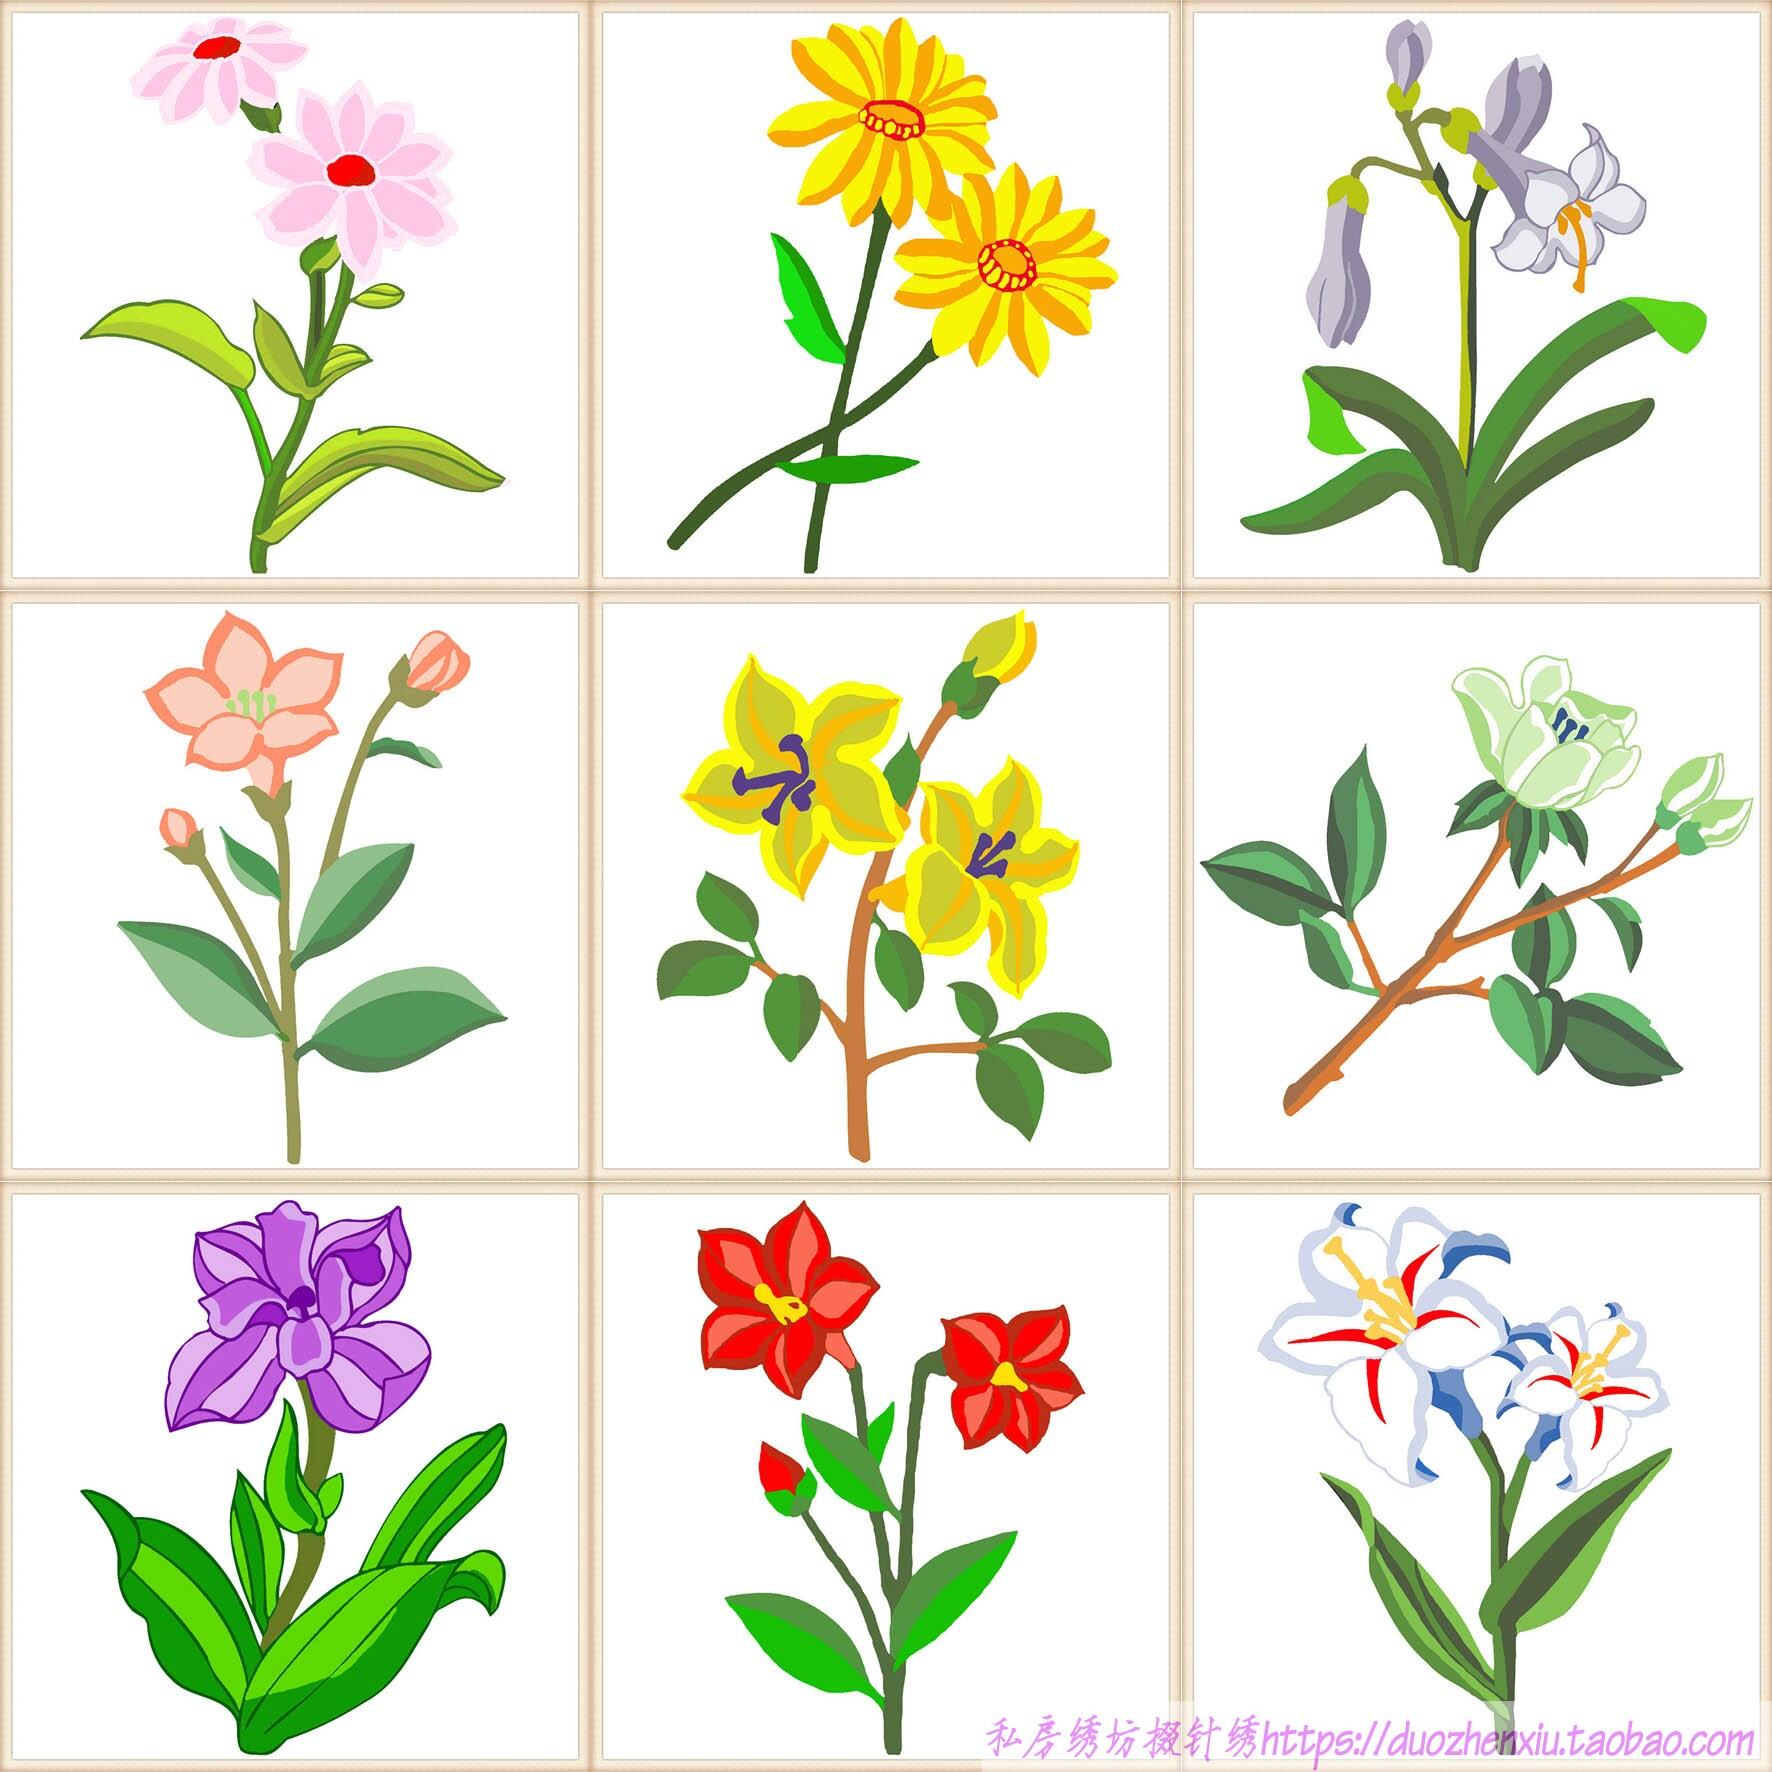 Thêu hoa anh đào Sakura Nhật Bản  How to embroider Sakura flower   YouTube